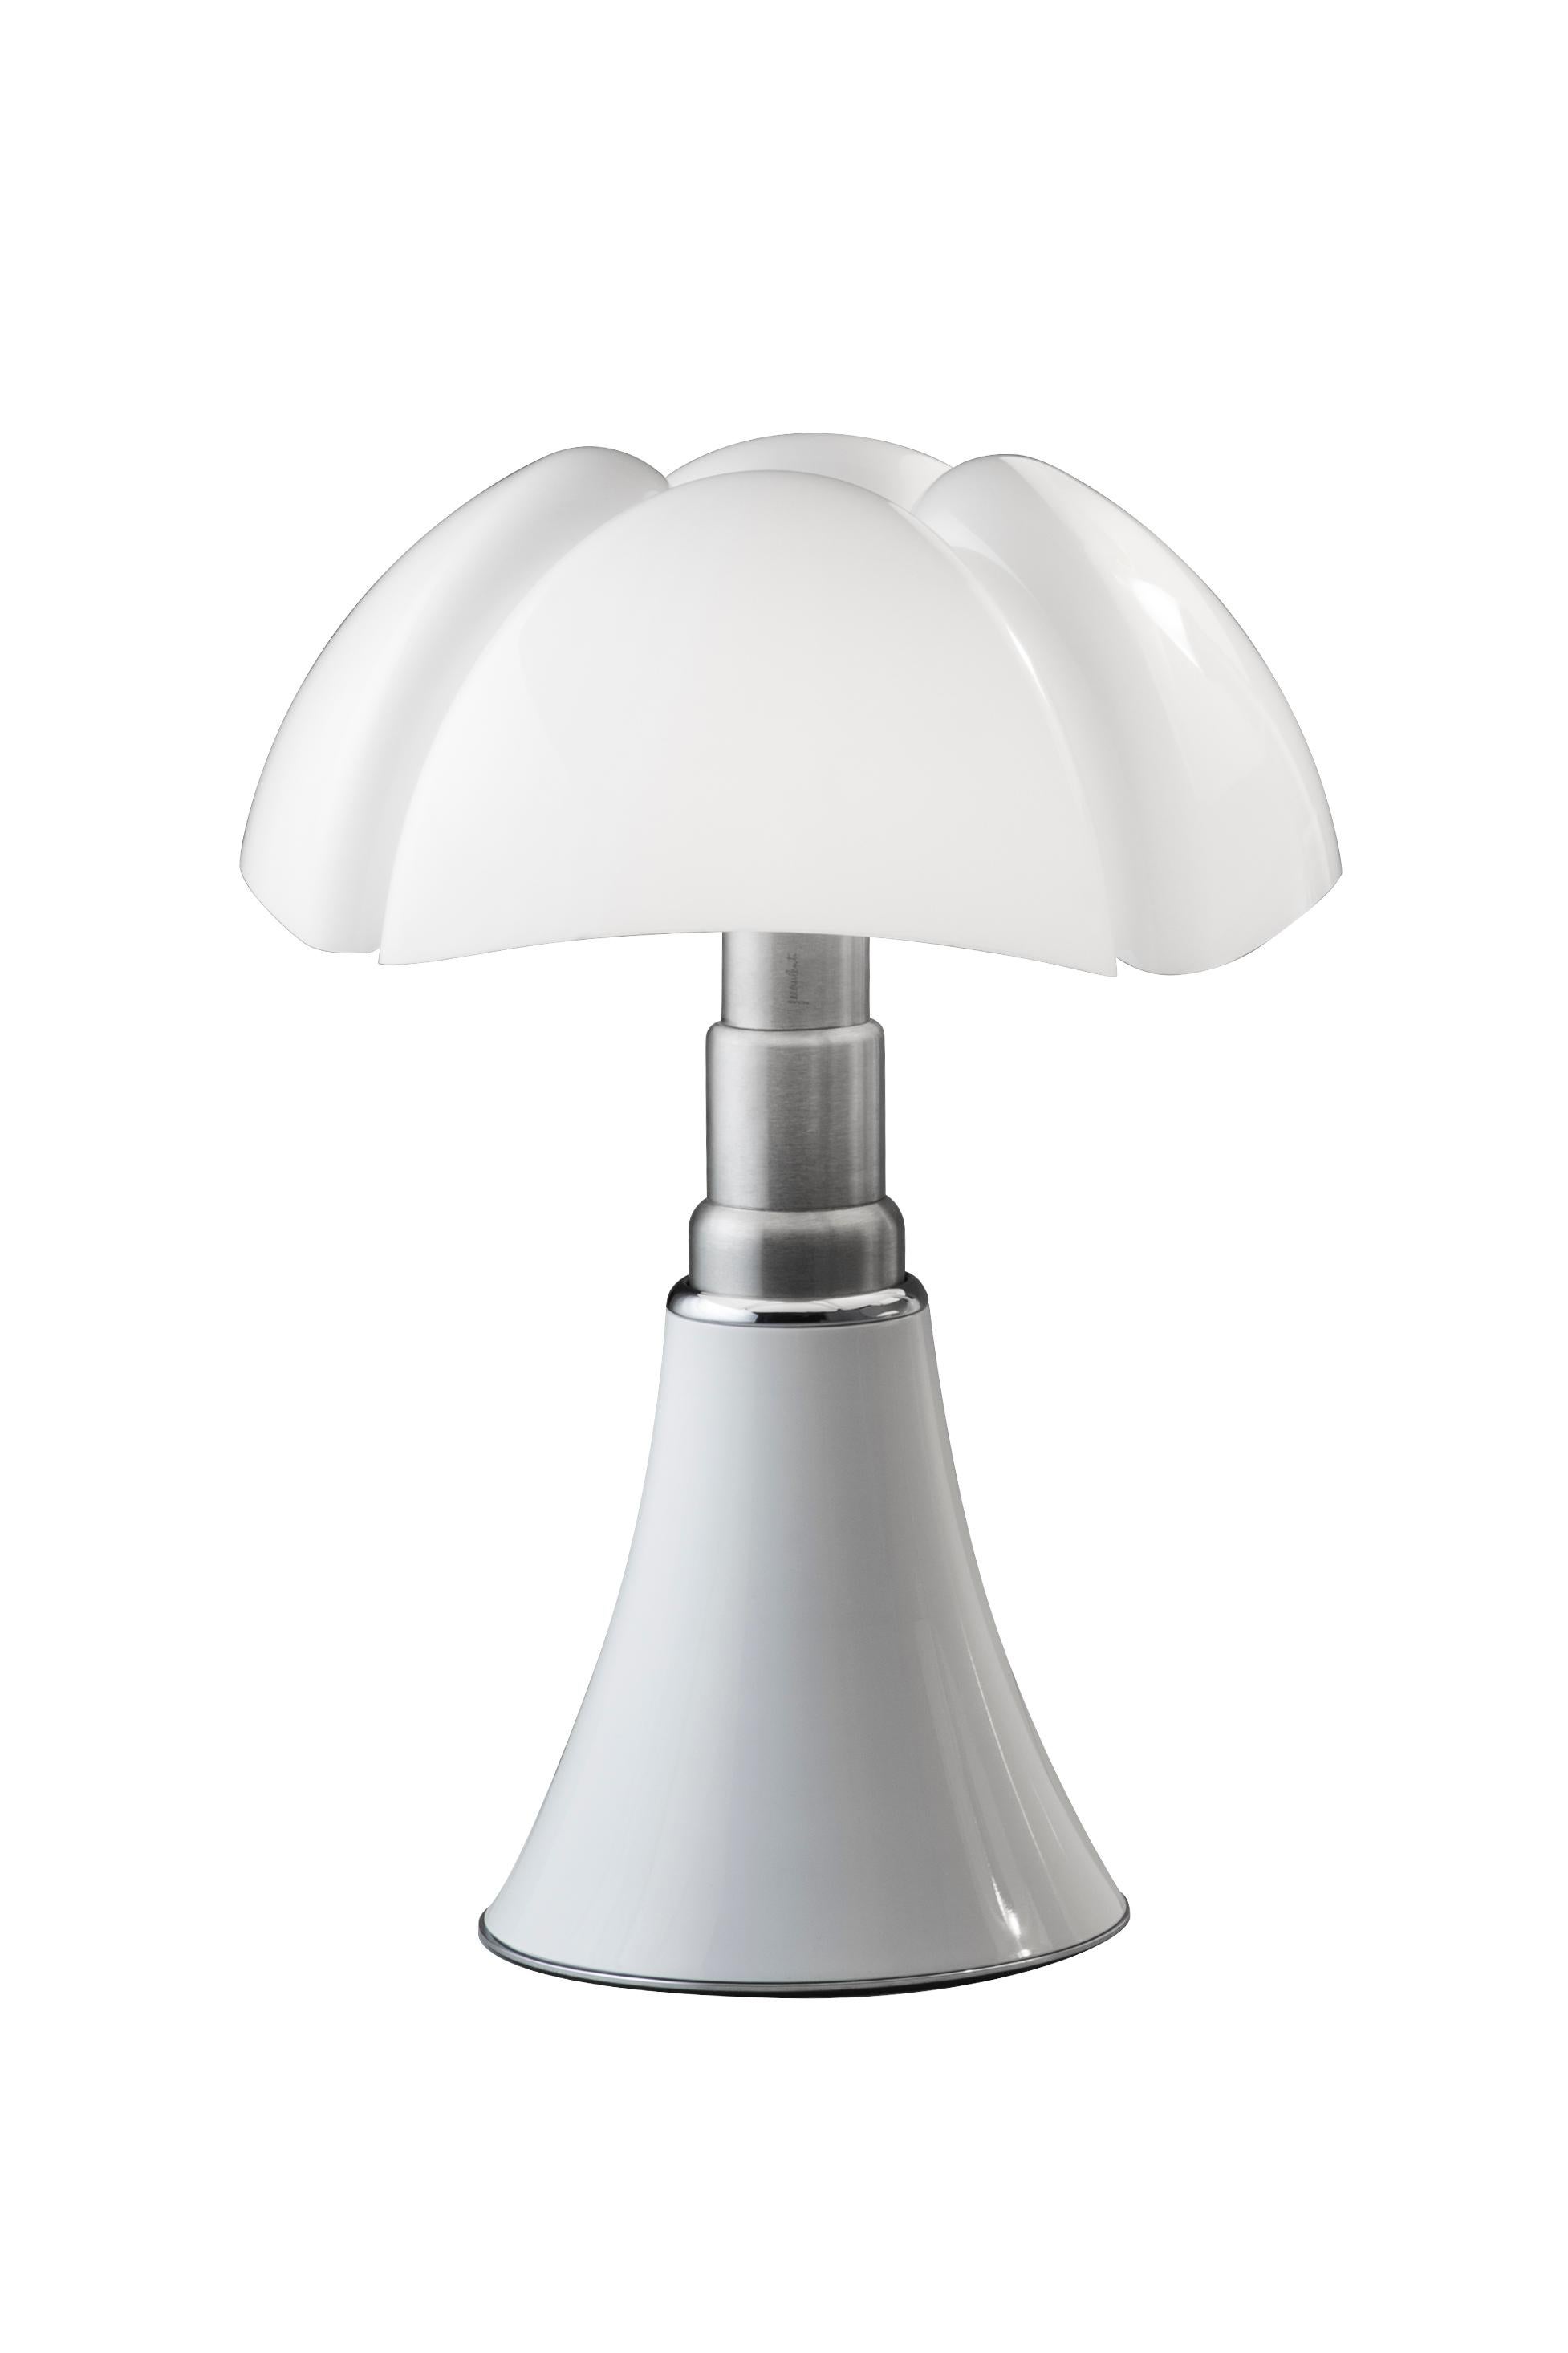 En vente : White (Bianco) Lampe de bureau Martinelli Luce LED Minipipistrello 620/J de Gae Aulenti